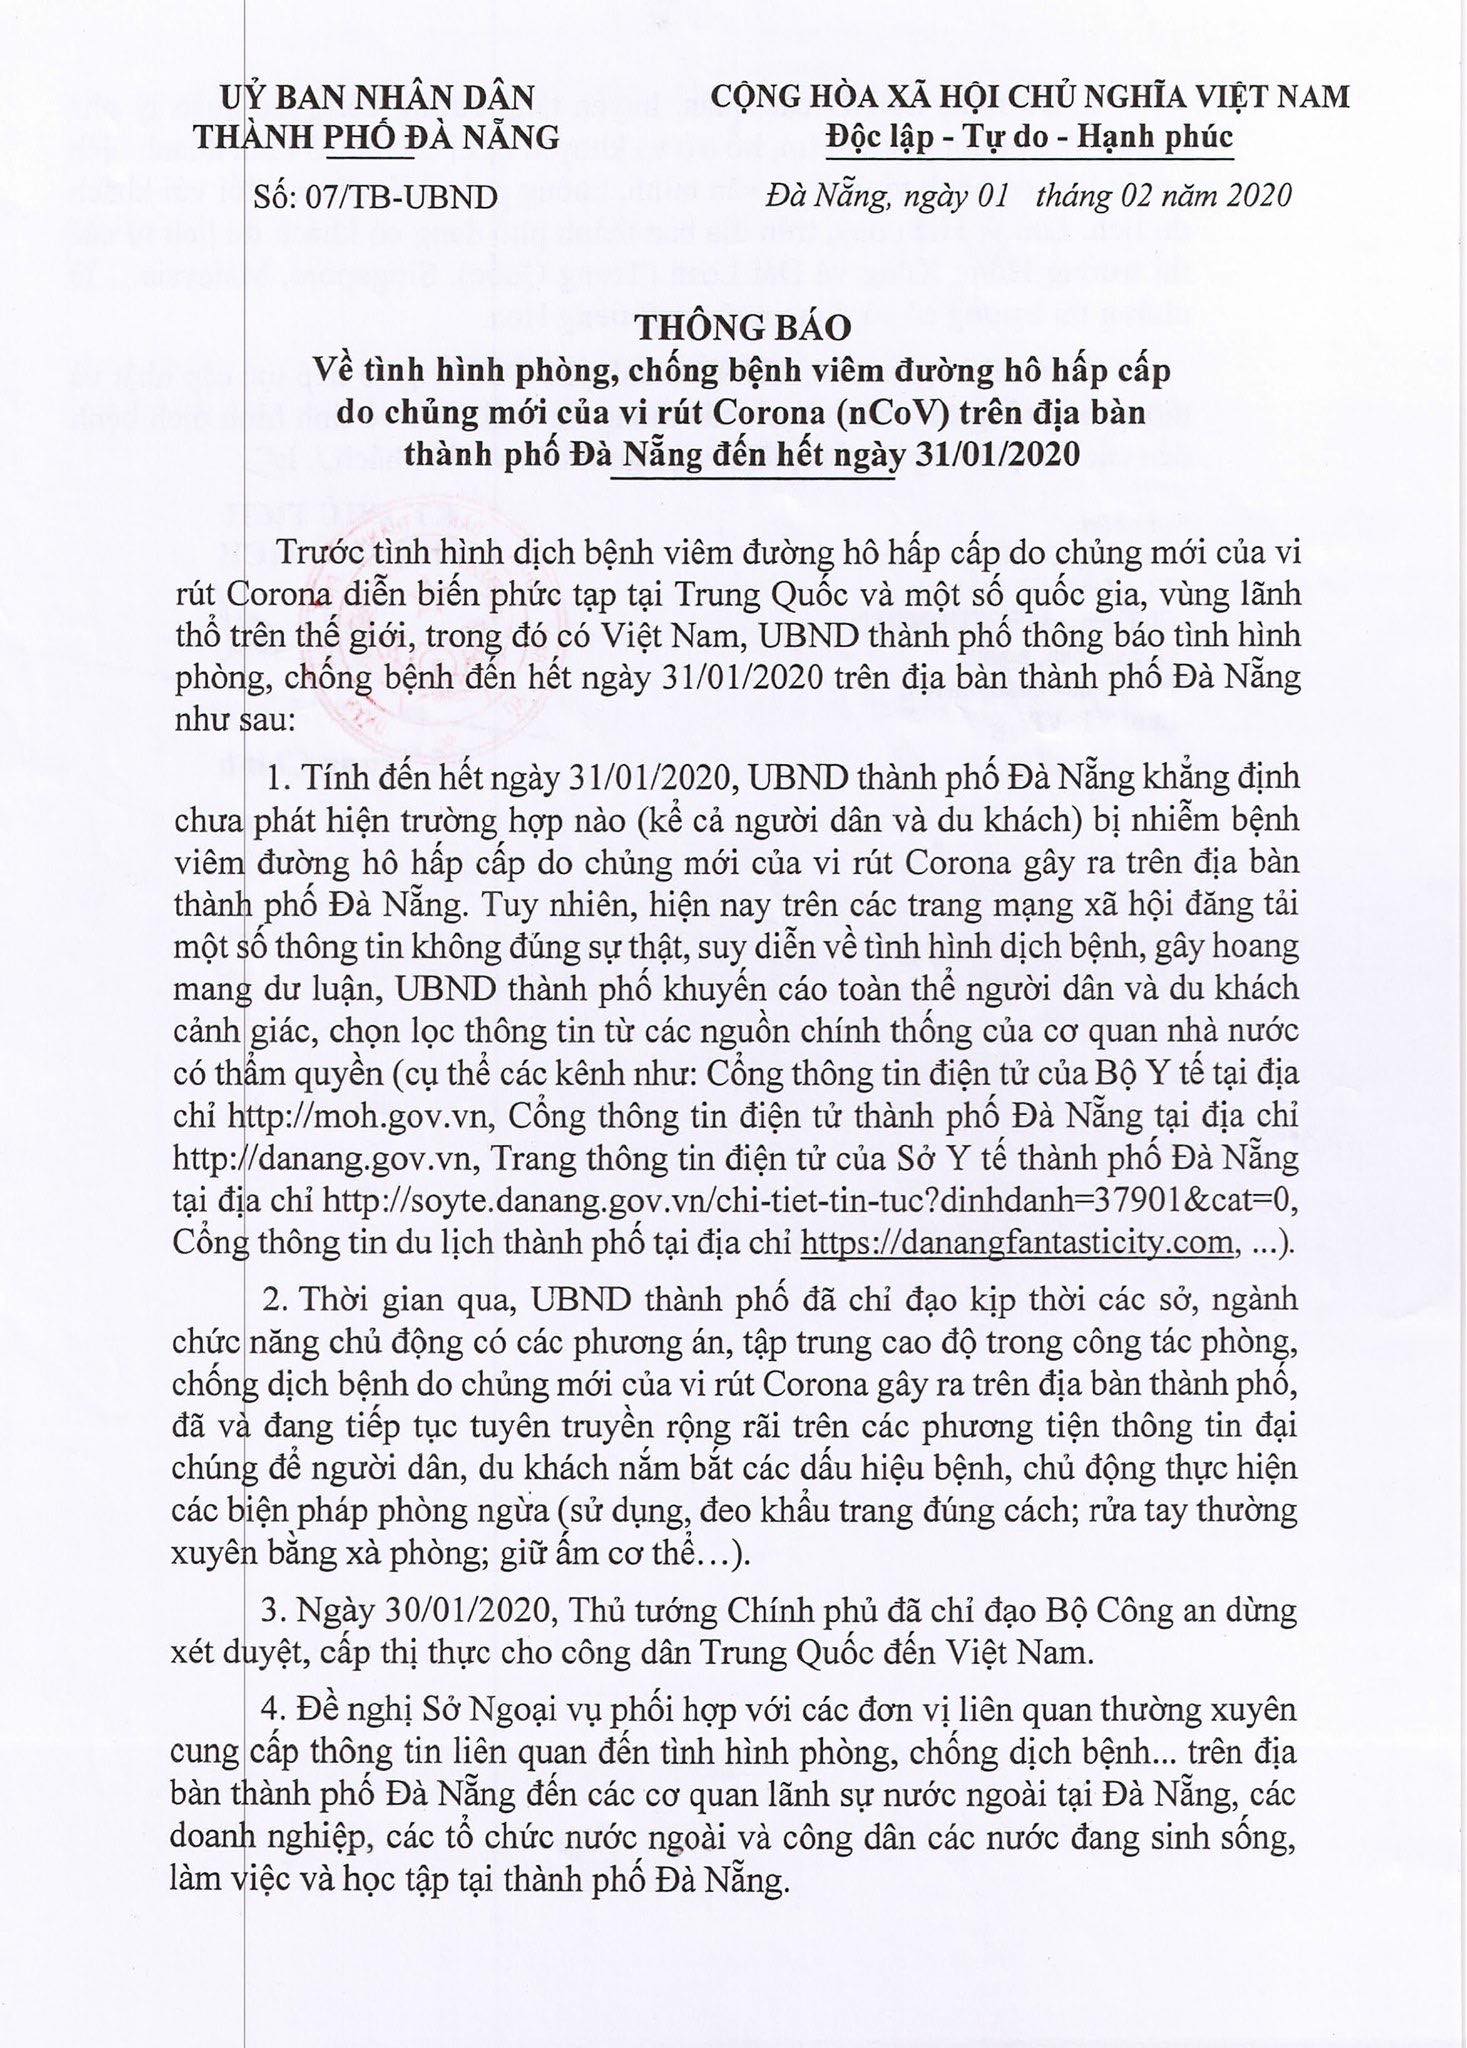 Thong Bao Ve Tinh Hinh Phong Chong Benh Viem Duong Ho Hap Cap Cho Chung Moi Cua Vi Rut Corona Ncov Tren Dia Ban Thanh Pho Da Nang Den Het Ngay 31 01 2020 01